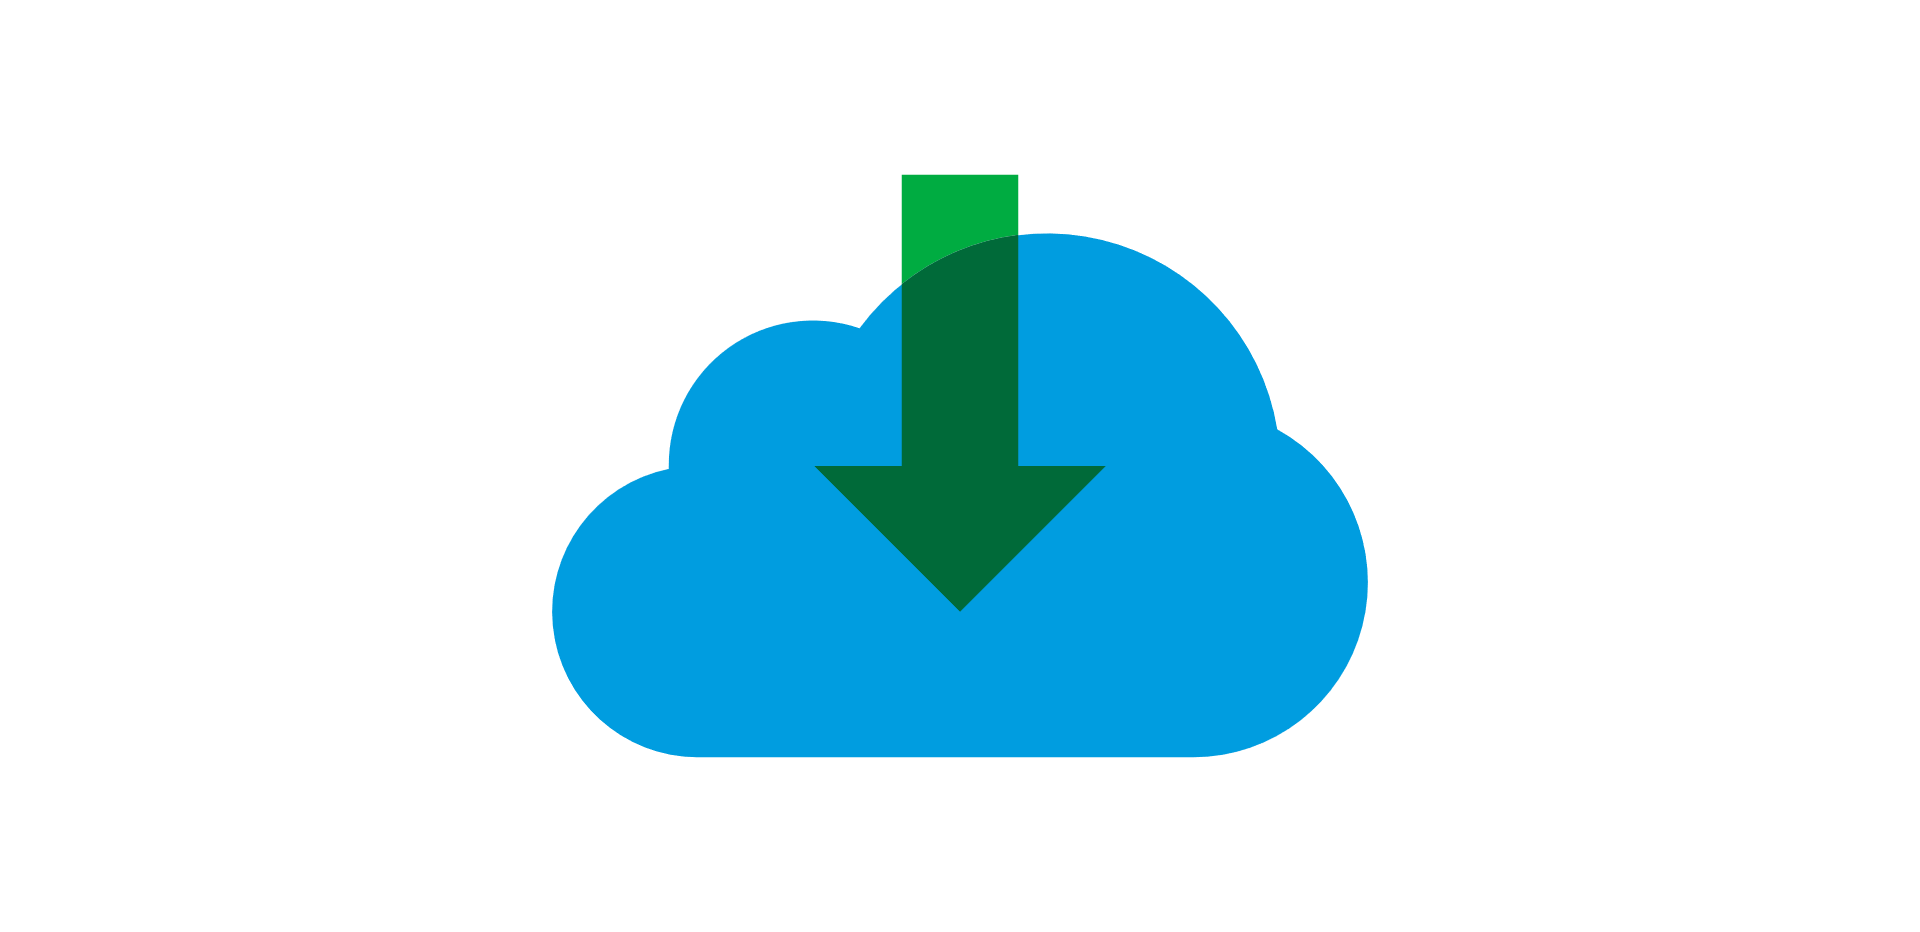 Blue cloud icon representing HR transformation